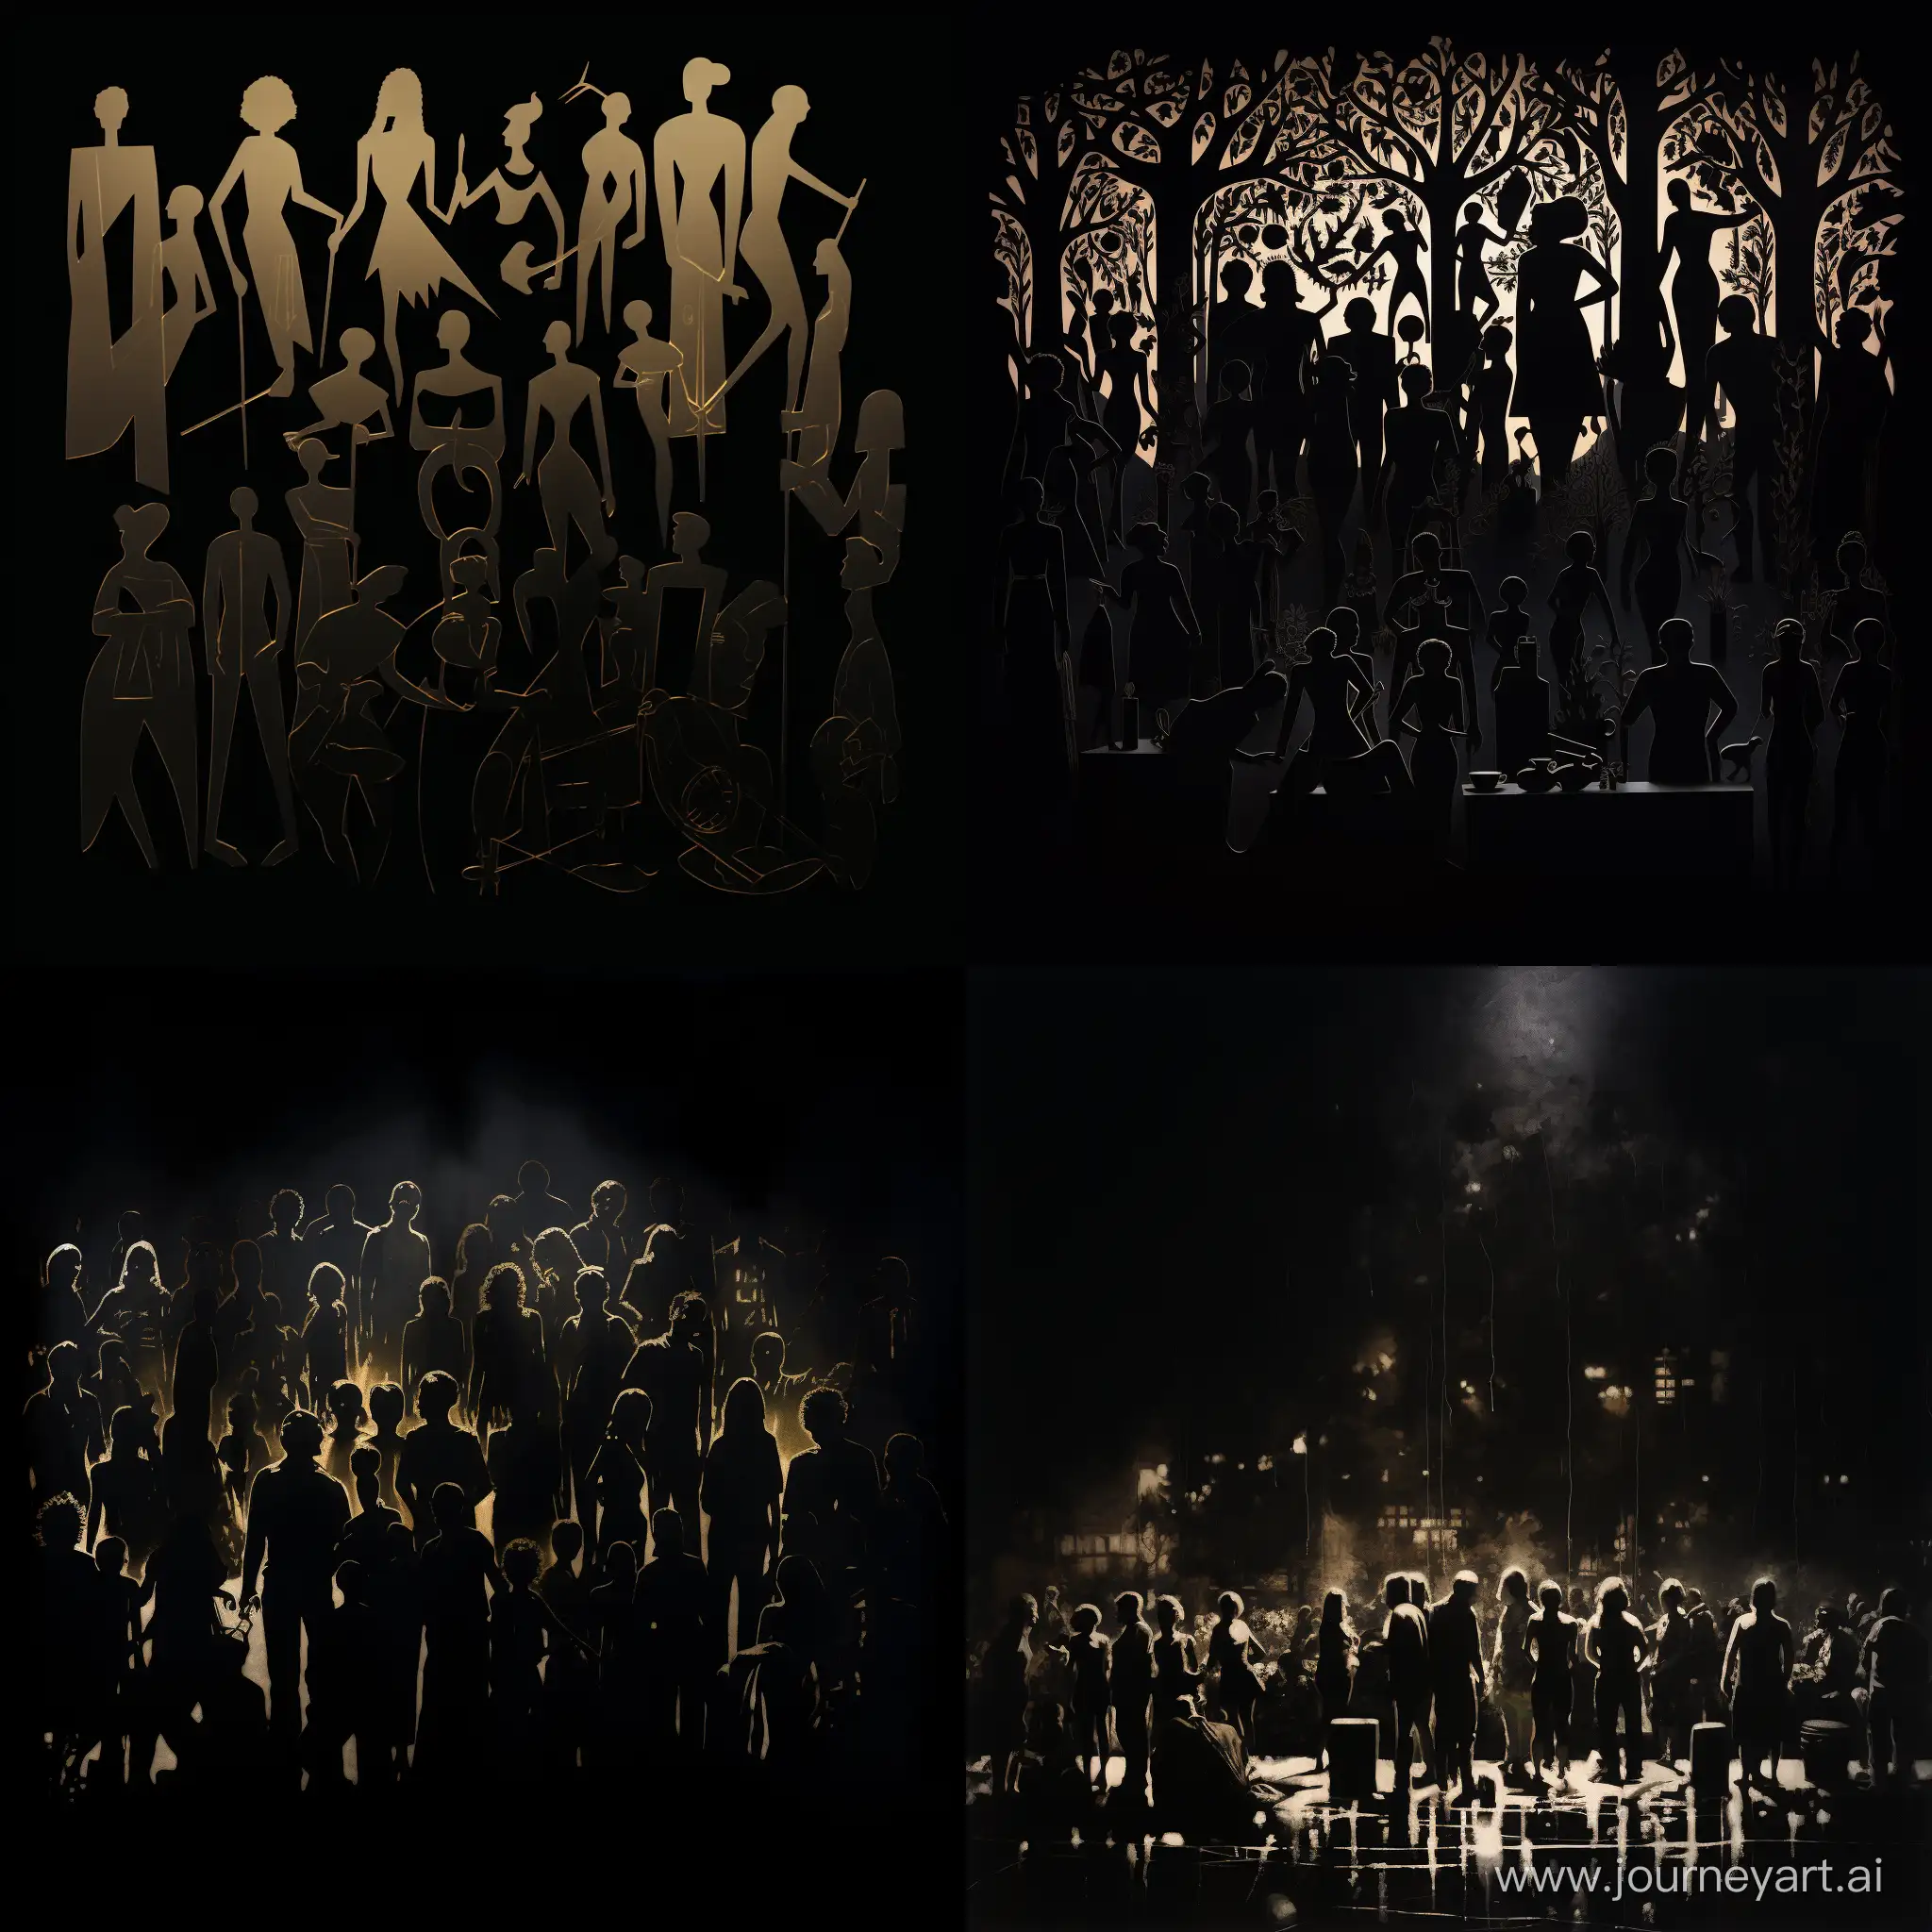 Elegant-Silhouettes-of-2010-Club-Gatherings-on-Black-Background